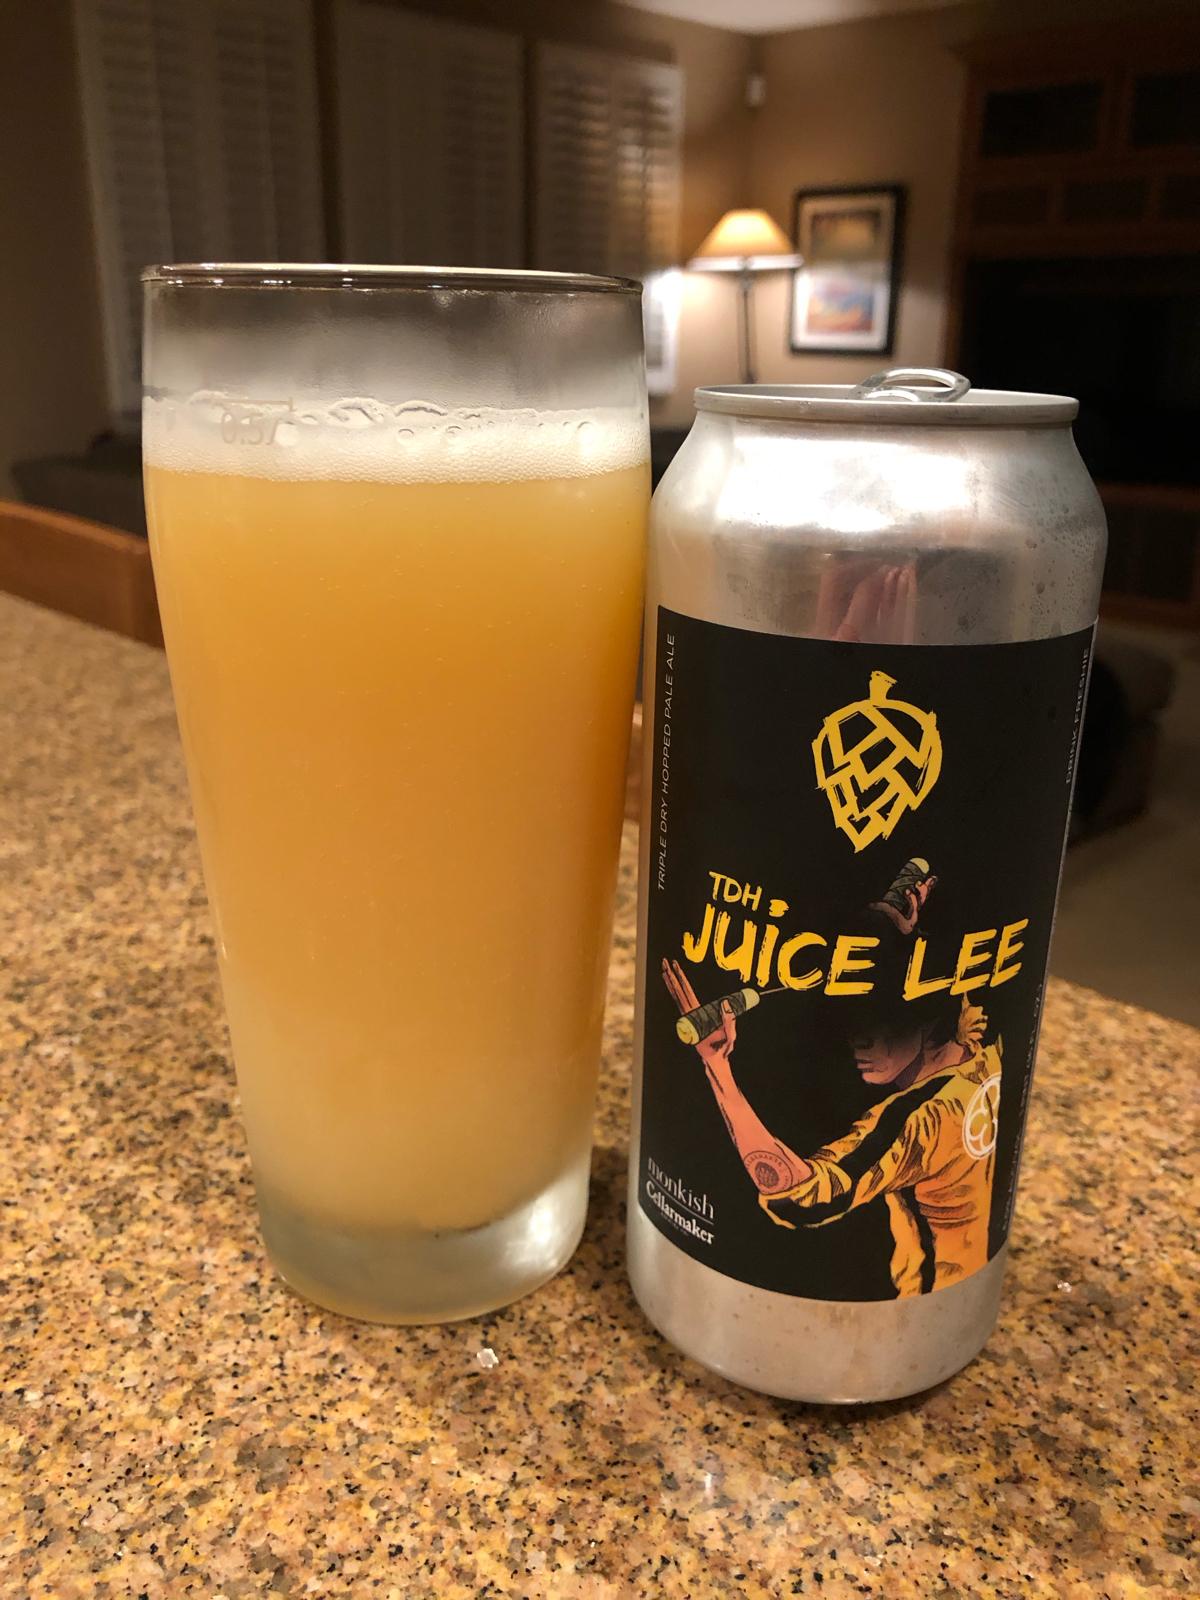 Juice Lee